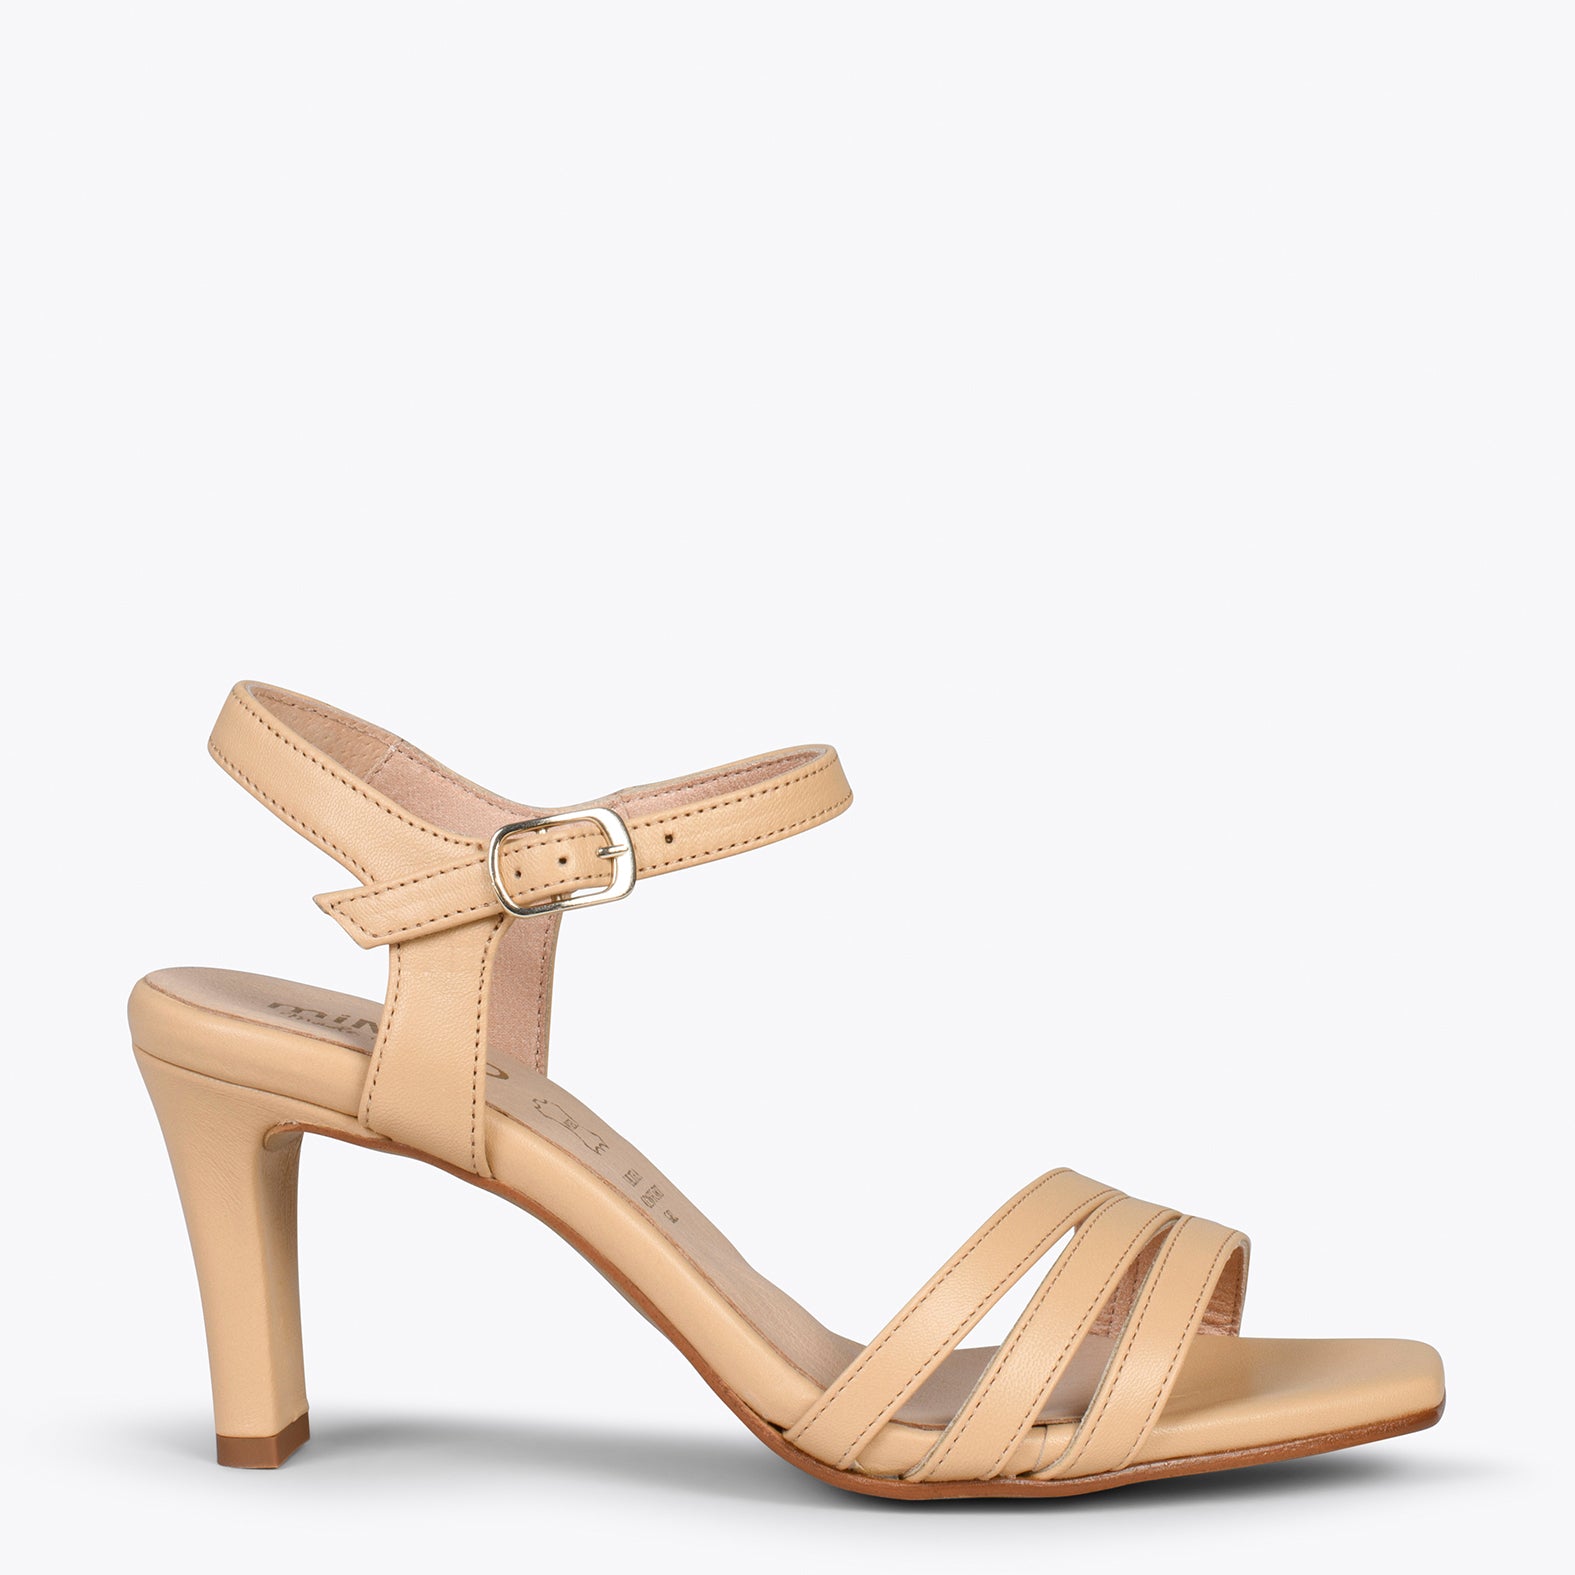 CANNES – SAND strap high heel sandal